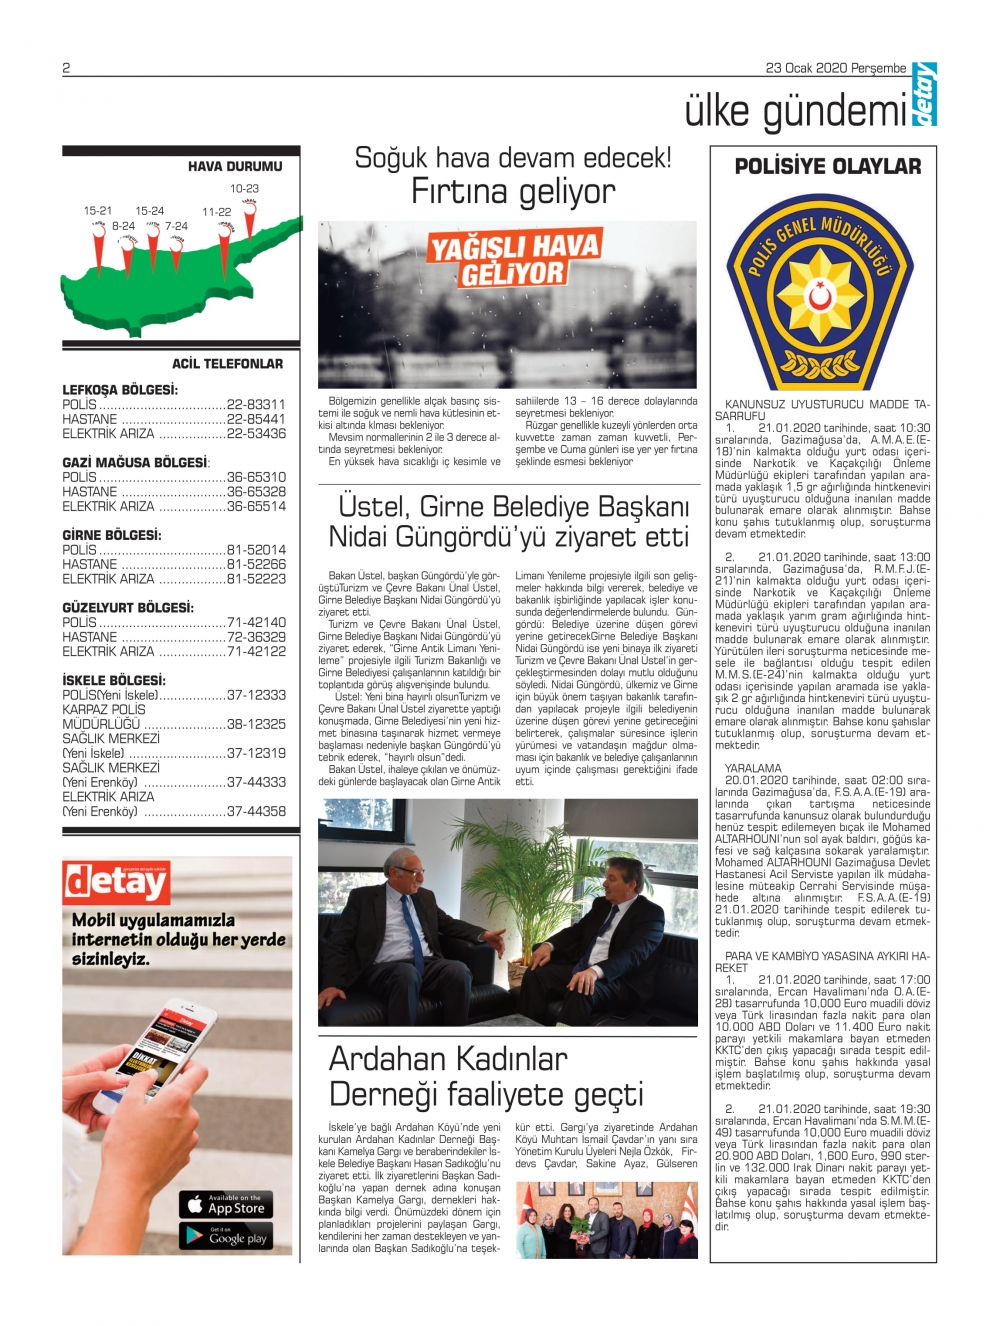 Detay Gazetes 24 Ocak 2020 galerisi resim 2